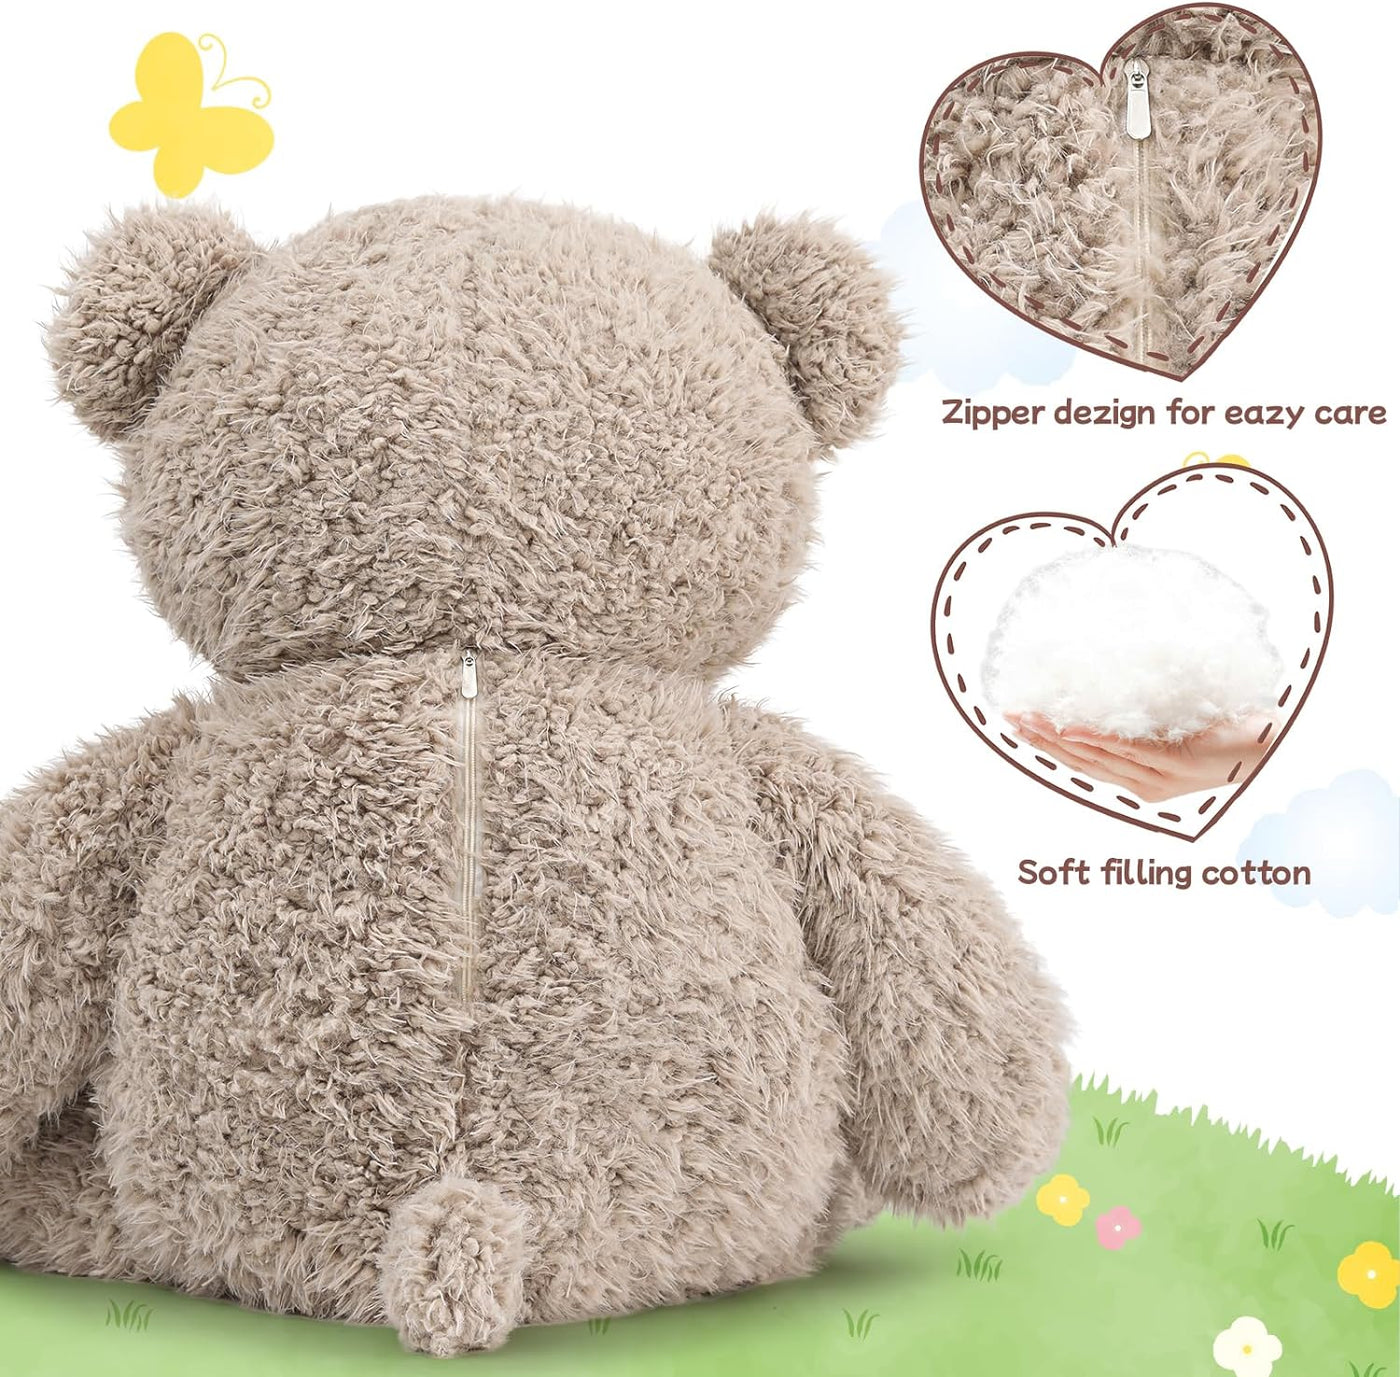 Vintage Teddy Bear Soft Toy, 39/47 Inches